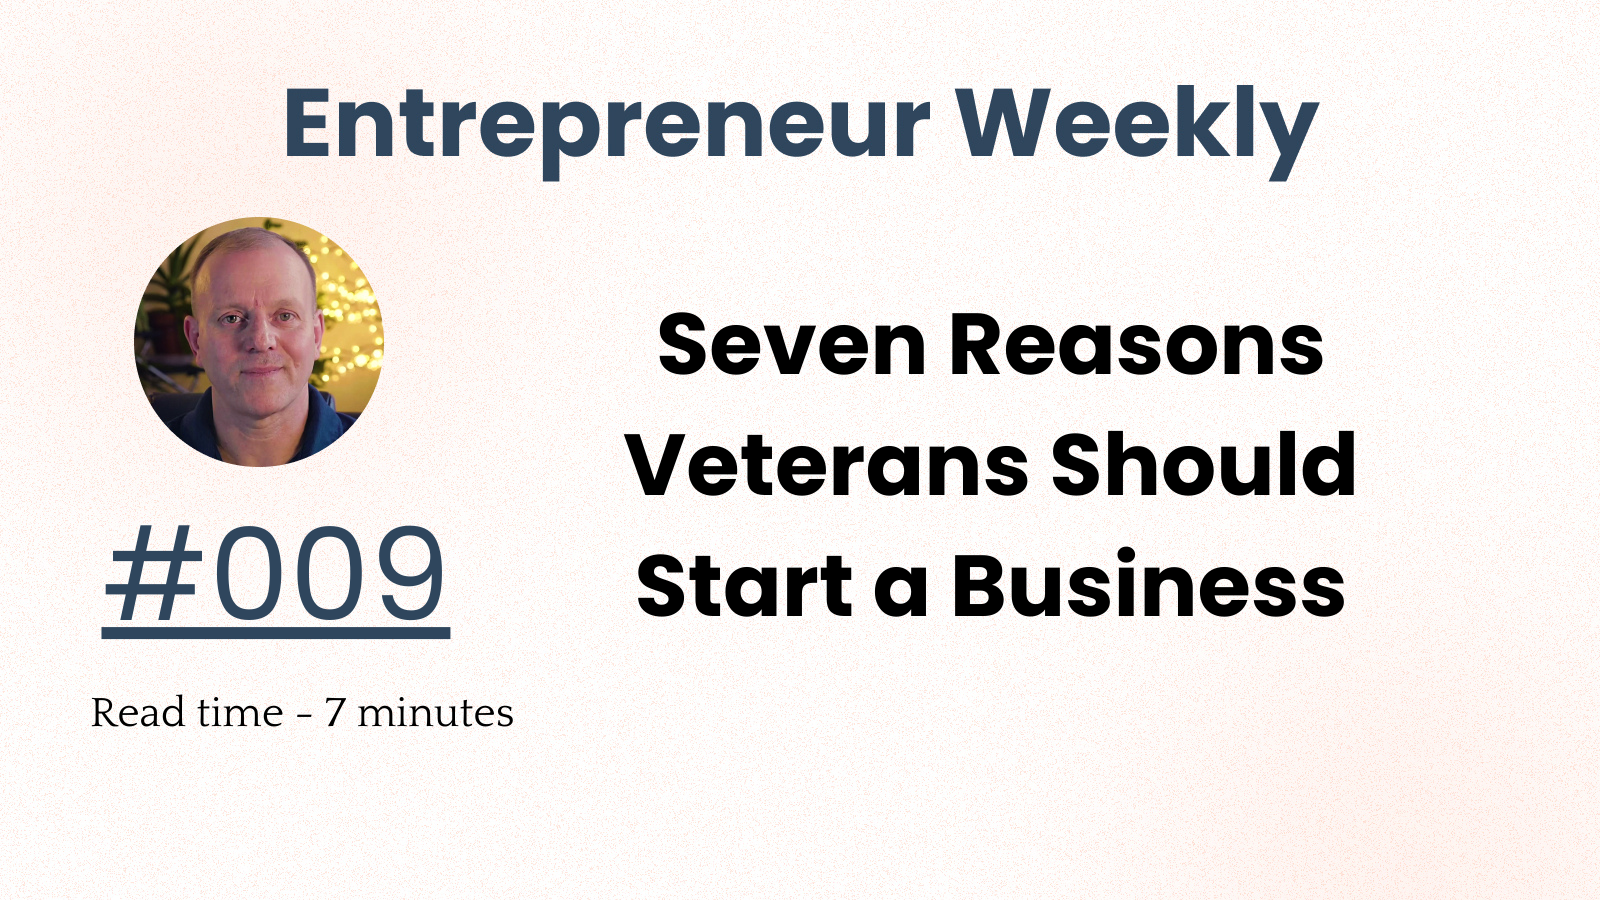 Seven Reasons Veterans Should Start a Business